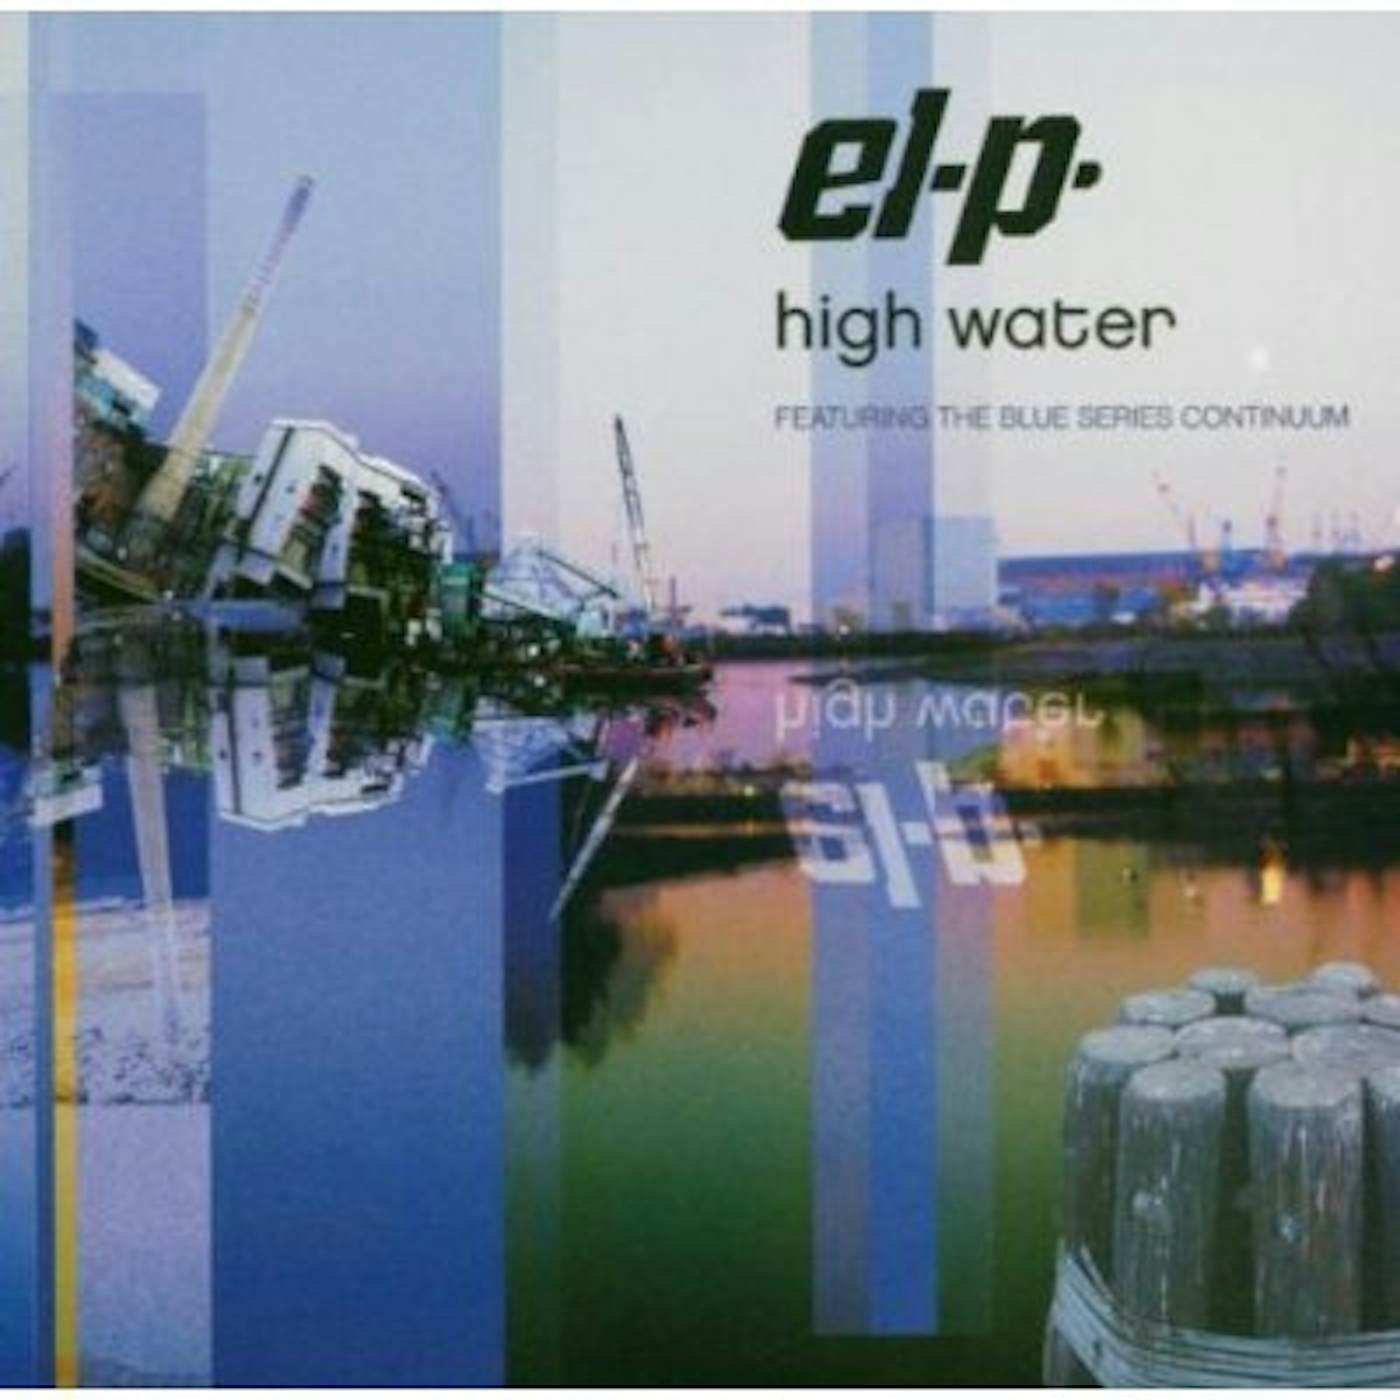 El-P HIGH WATER: MARK CD